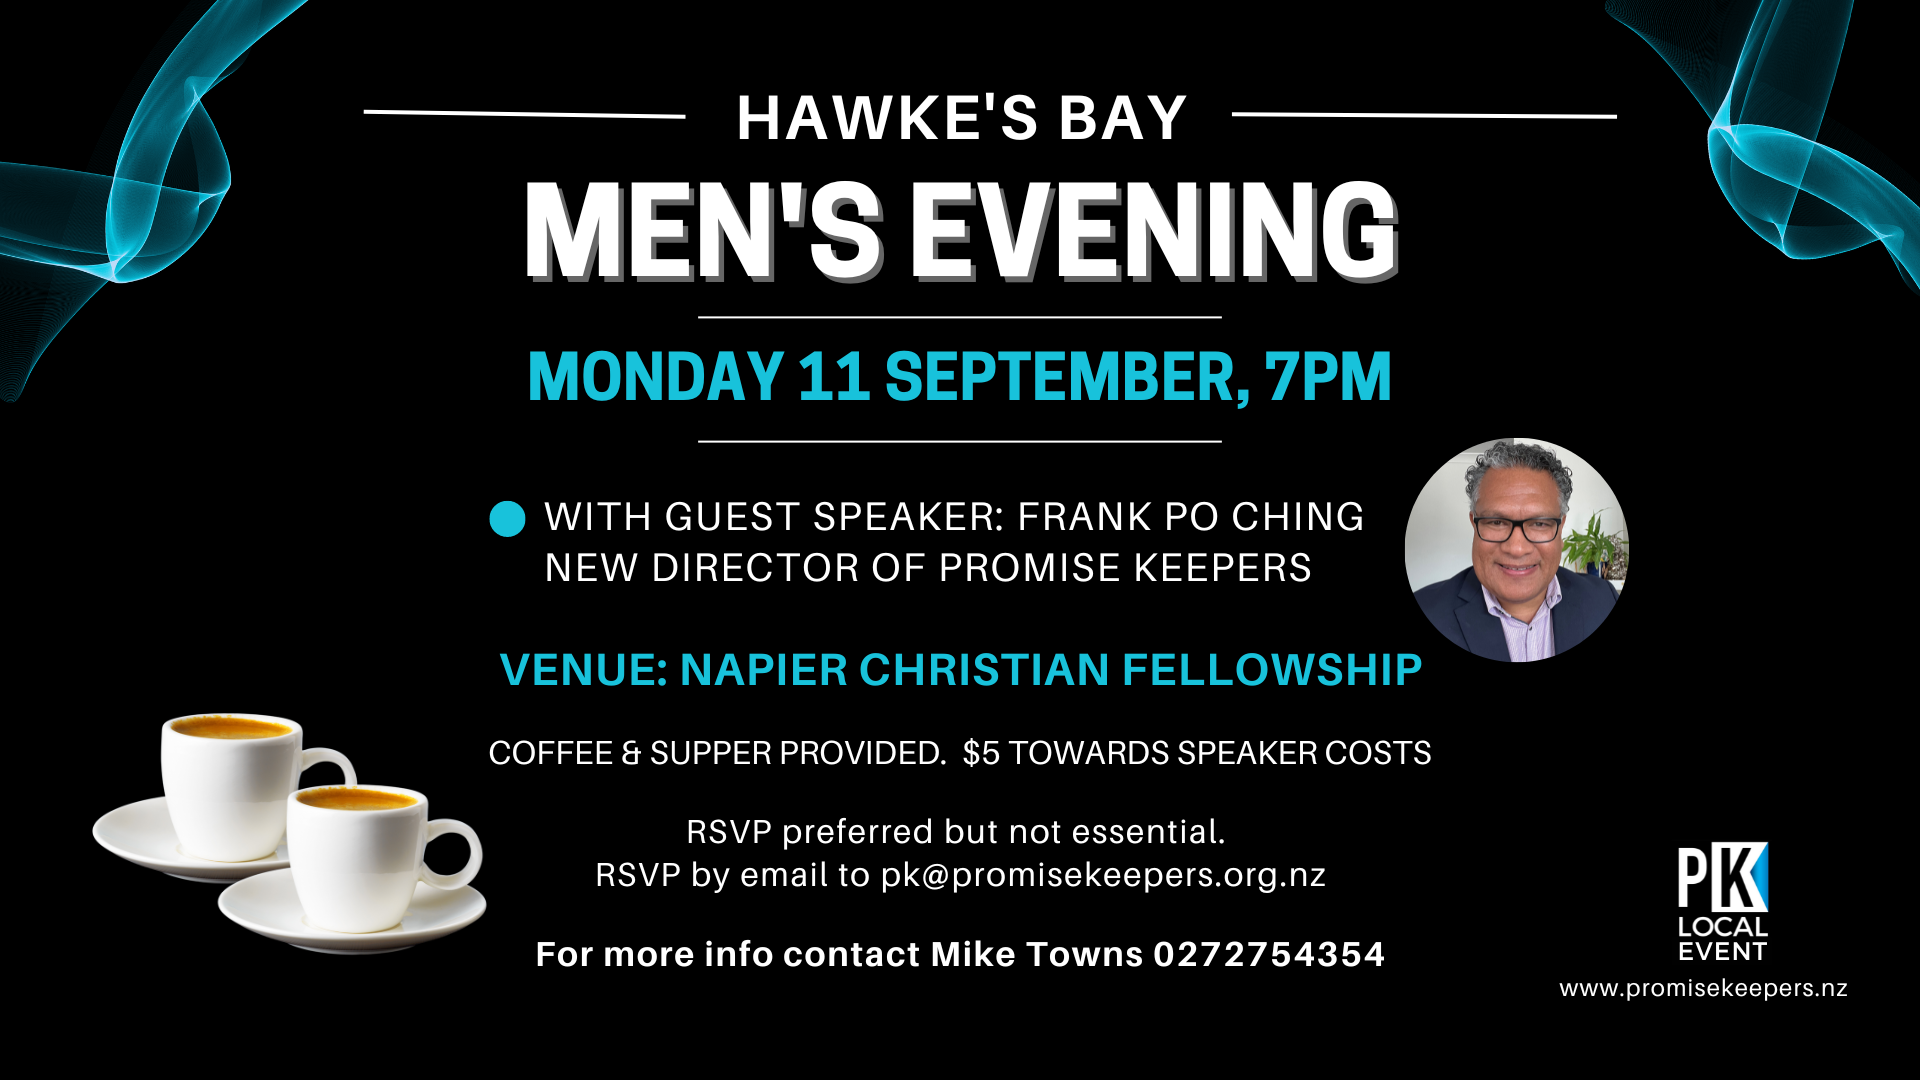 Hawke's Bay Men's Event on Monday 11 September